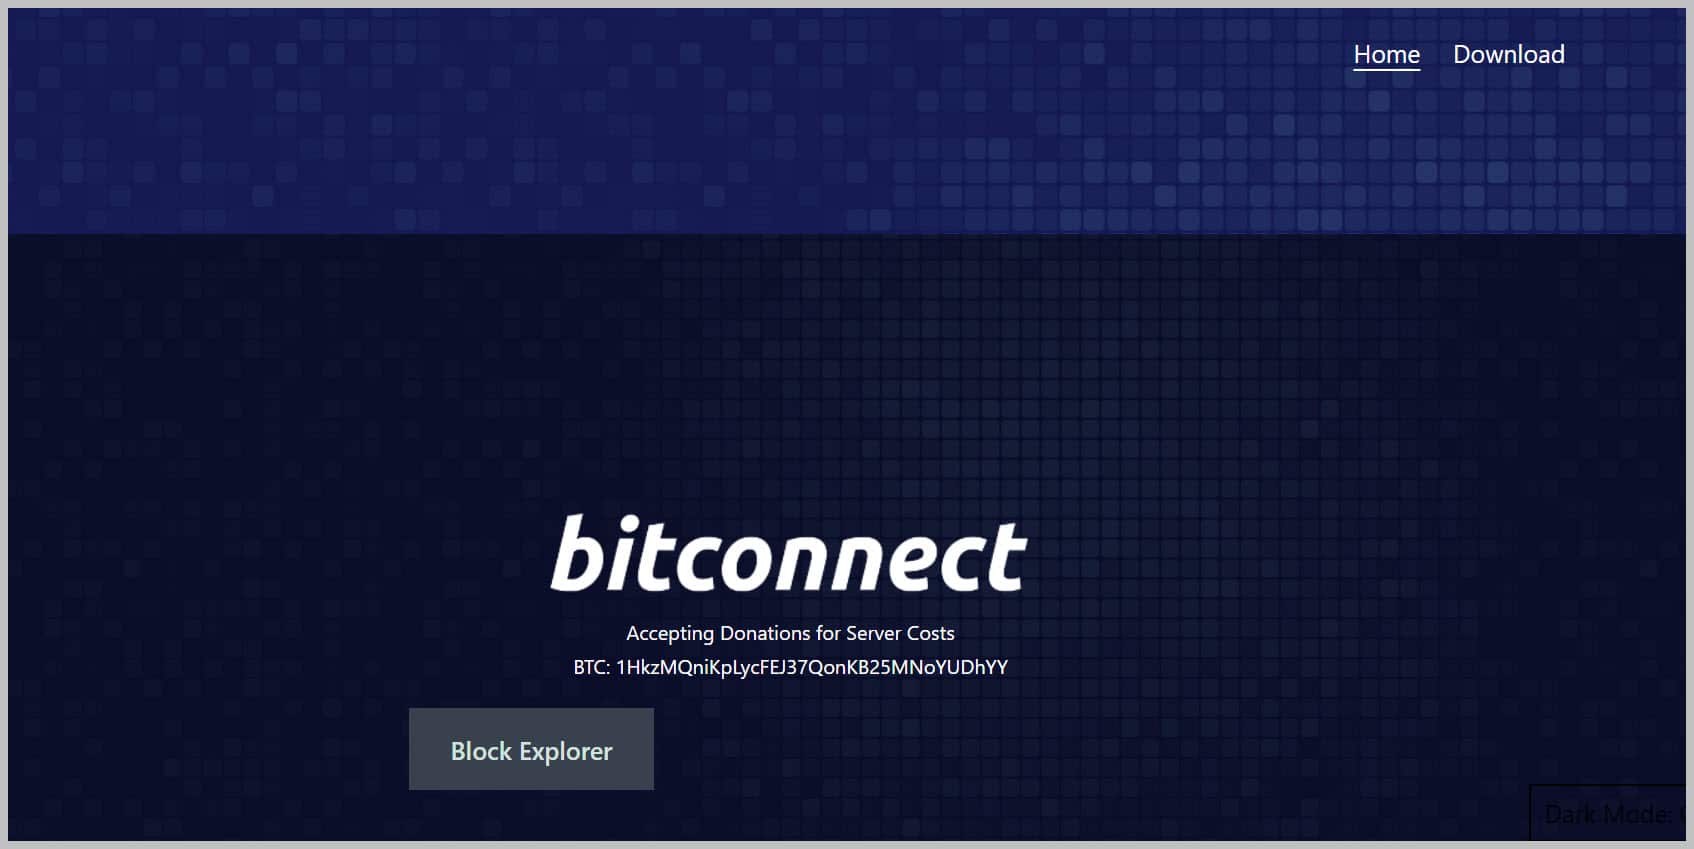 BitConnect Home Page